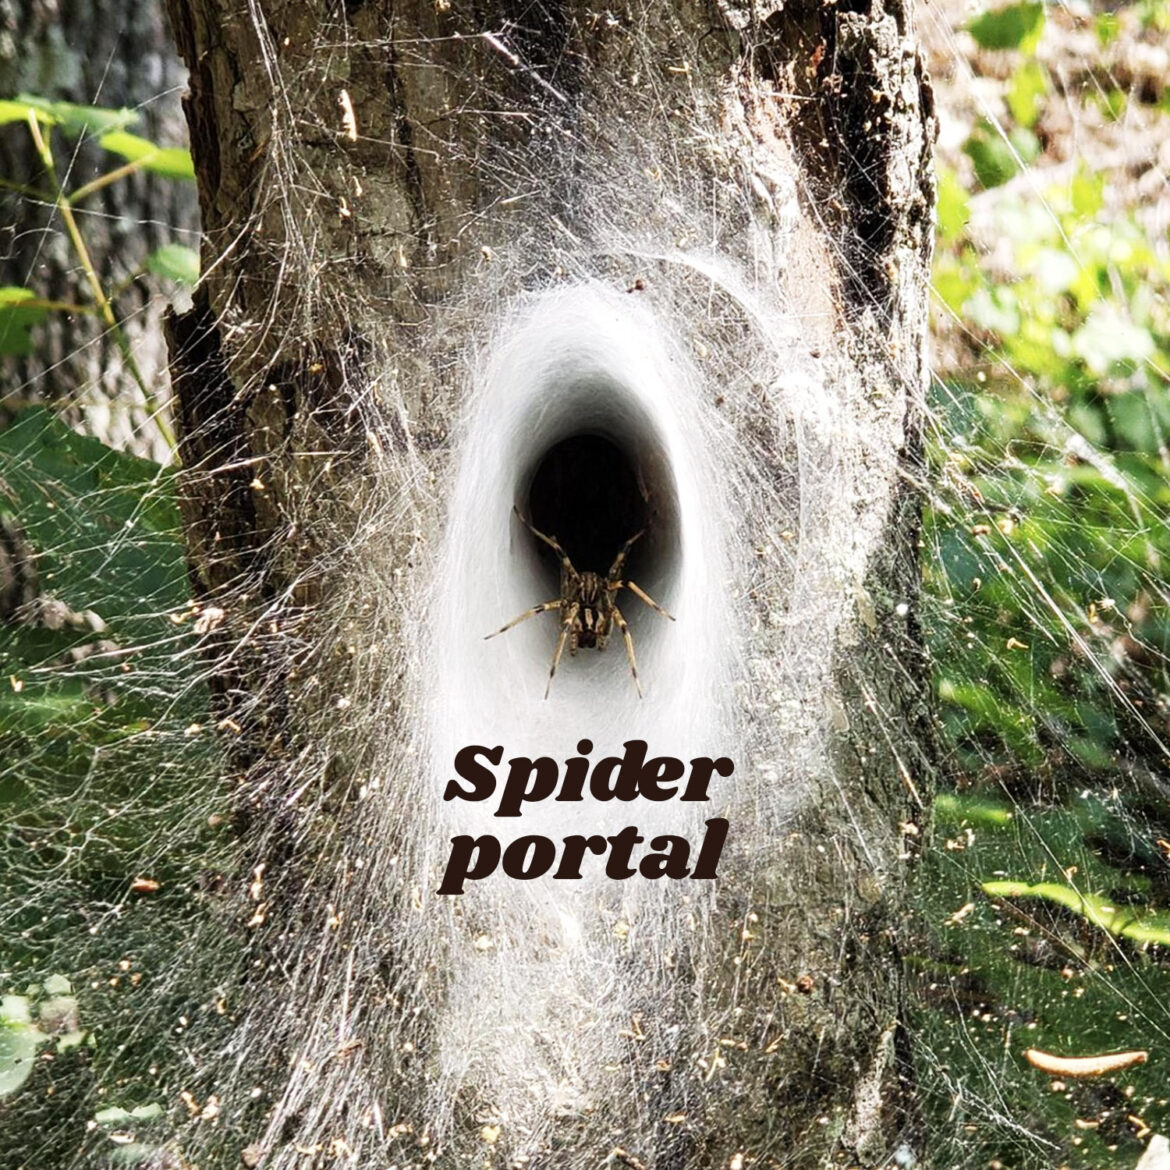 Spider portal